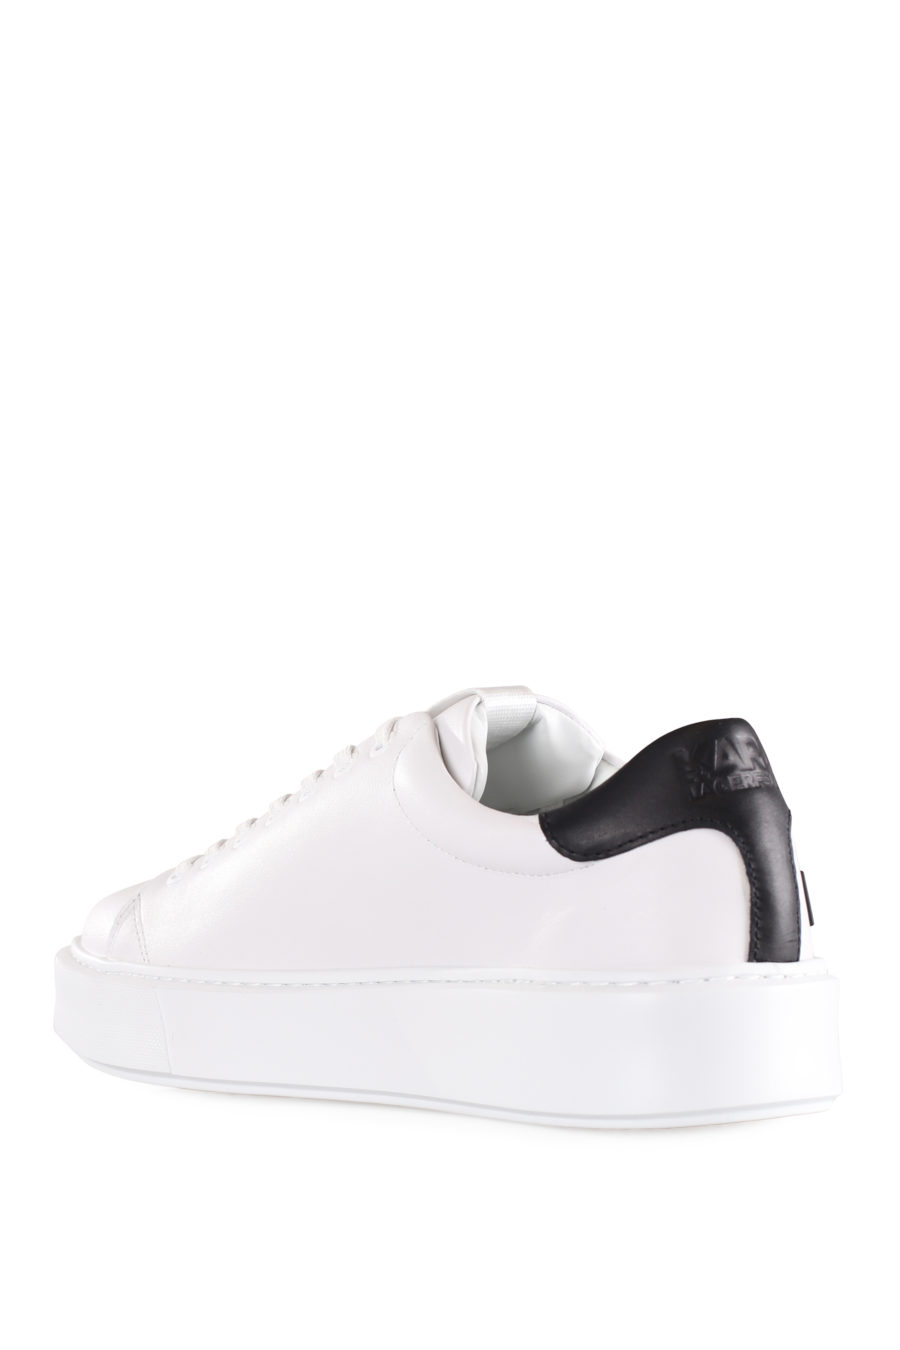 Zapatillas blancas con maxi logo en goma - IMG 9587